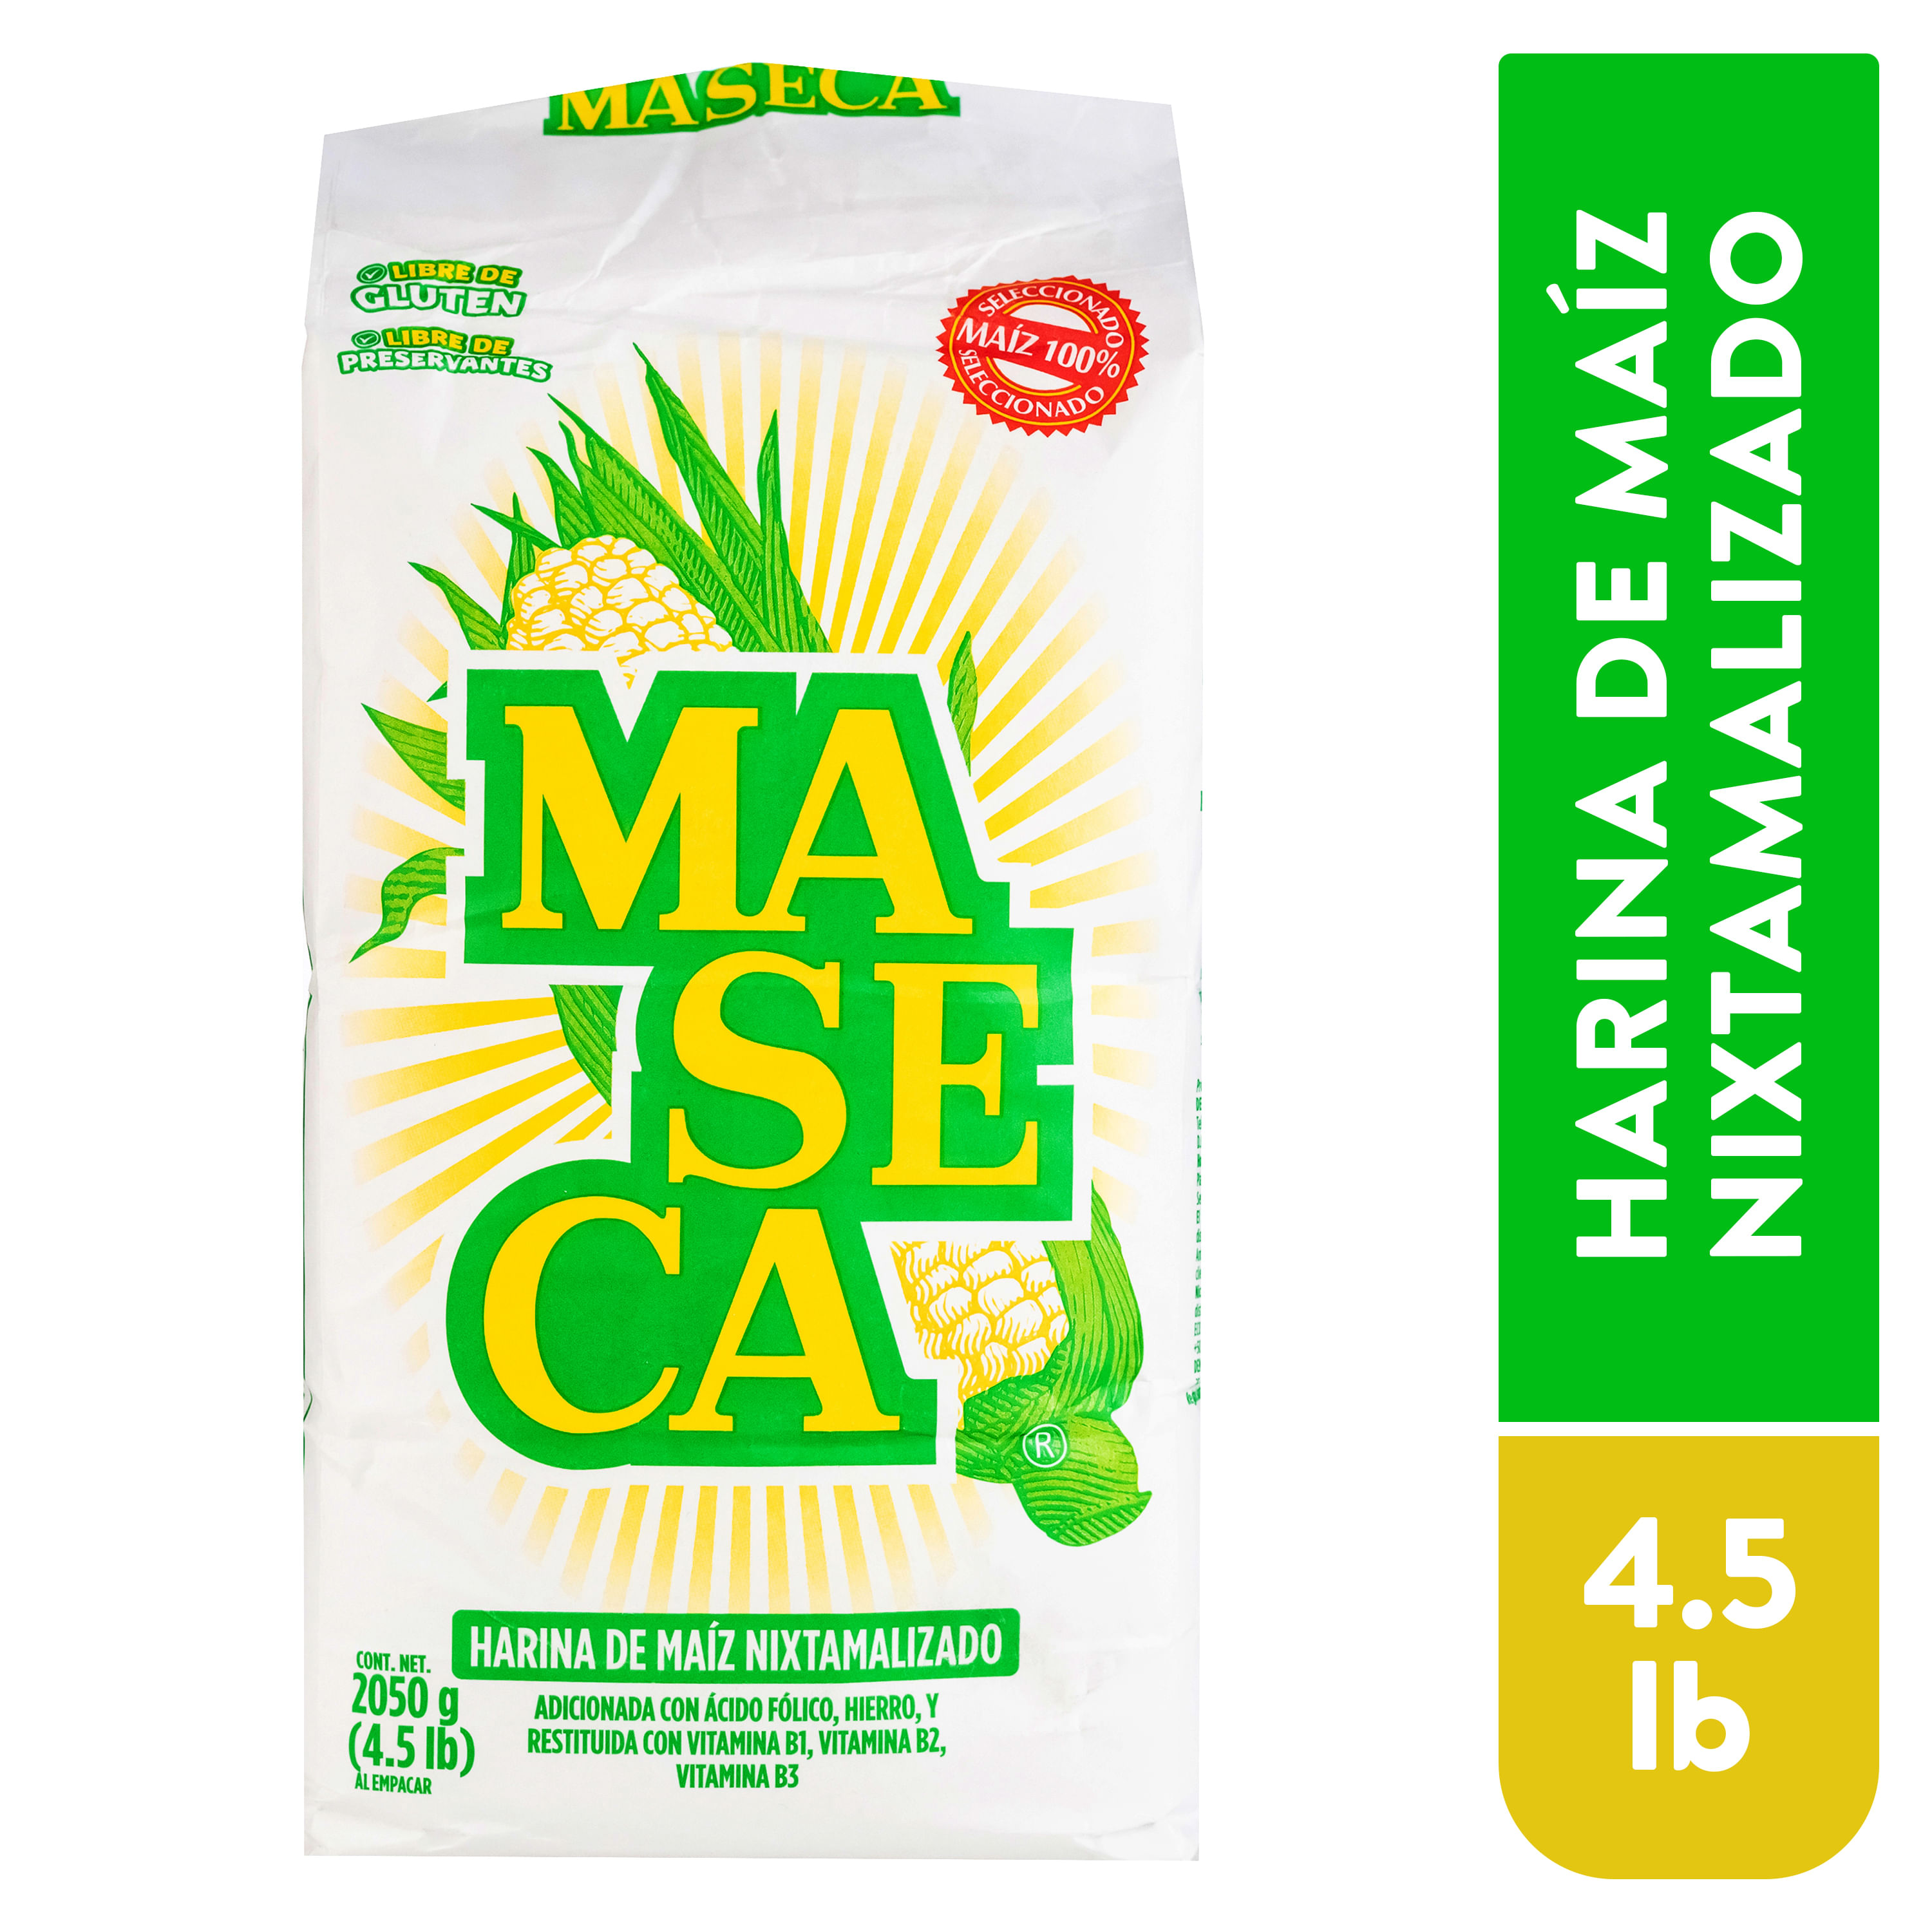 Maseca-Harina-De-Maiz-2050-Gr-1-24108